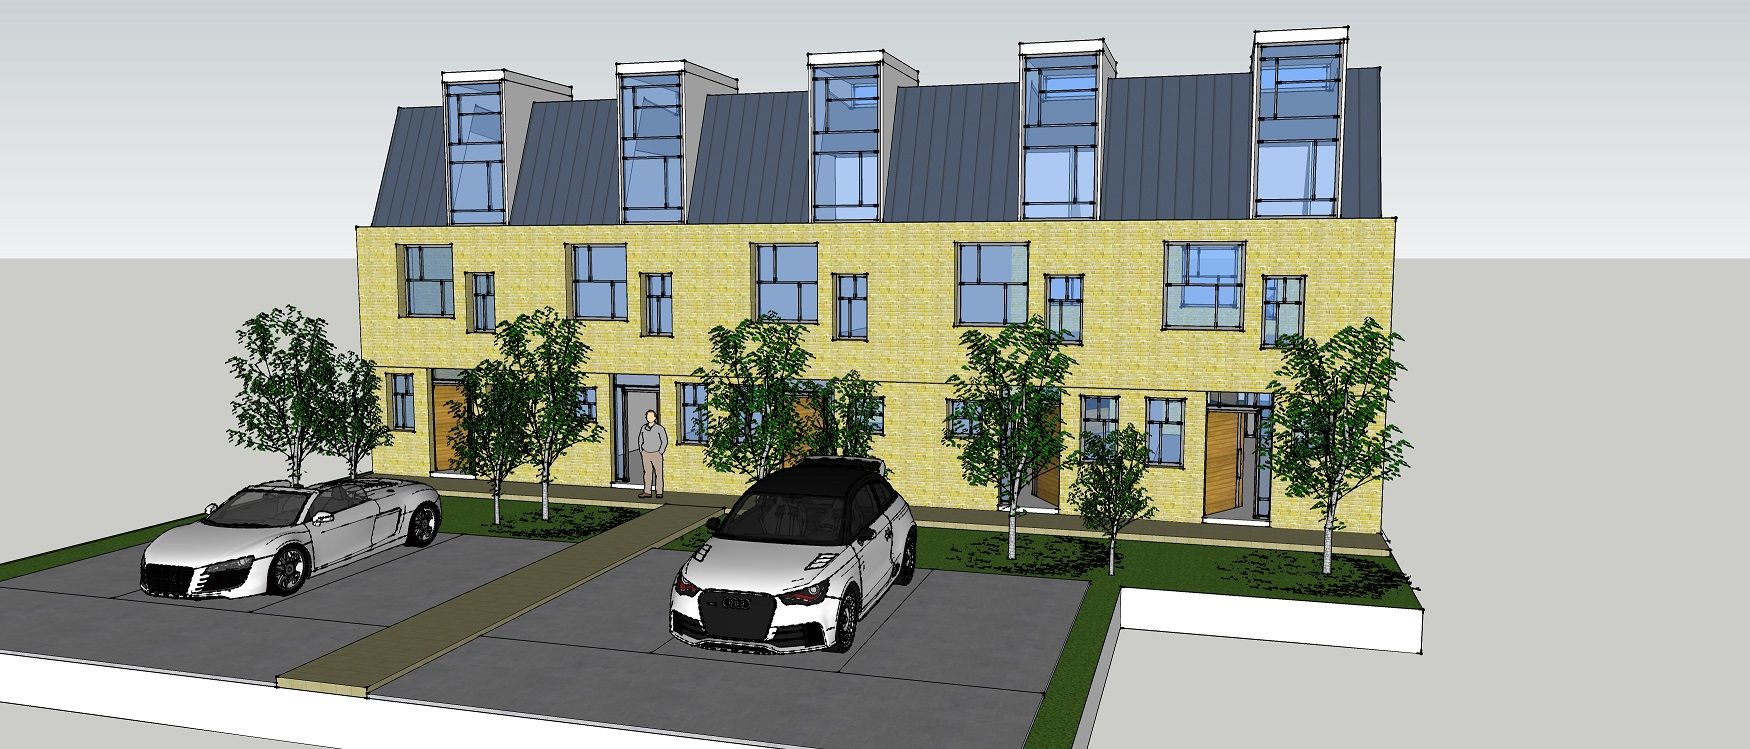 New multi-unit apartment designs, Croydon, London. Imagine Architects (Pty) Ltd